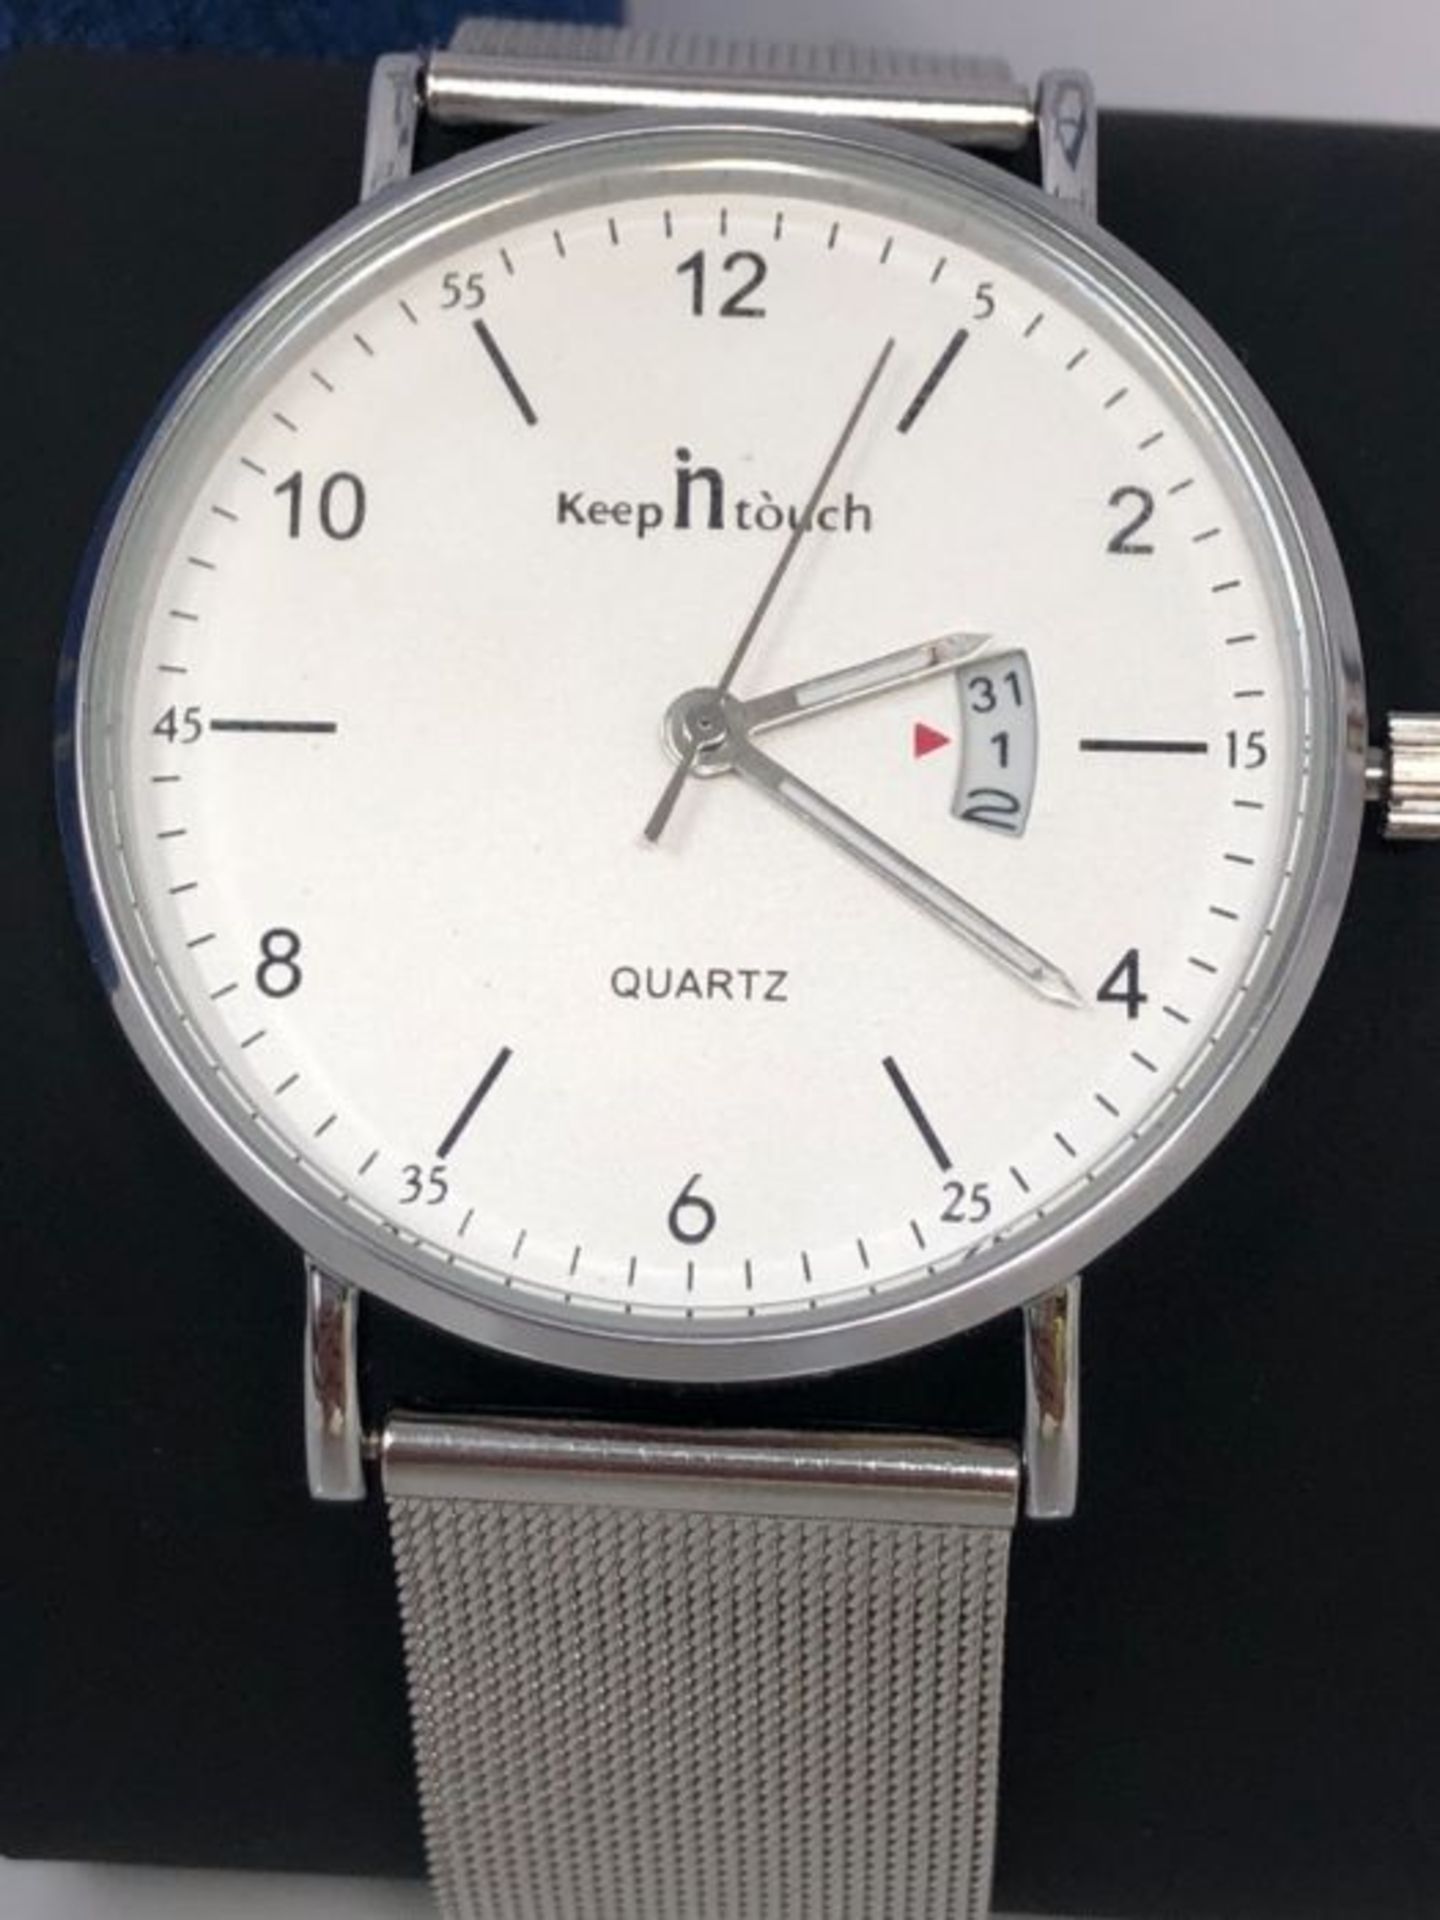 MICGIGI Men's Analog Quzrtz Watches Ultra Thin Waterproof Wrist Watch with Stainless S - Image 3 of 3